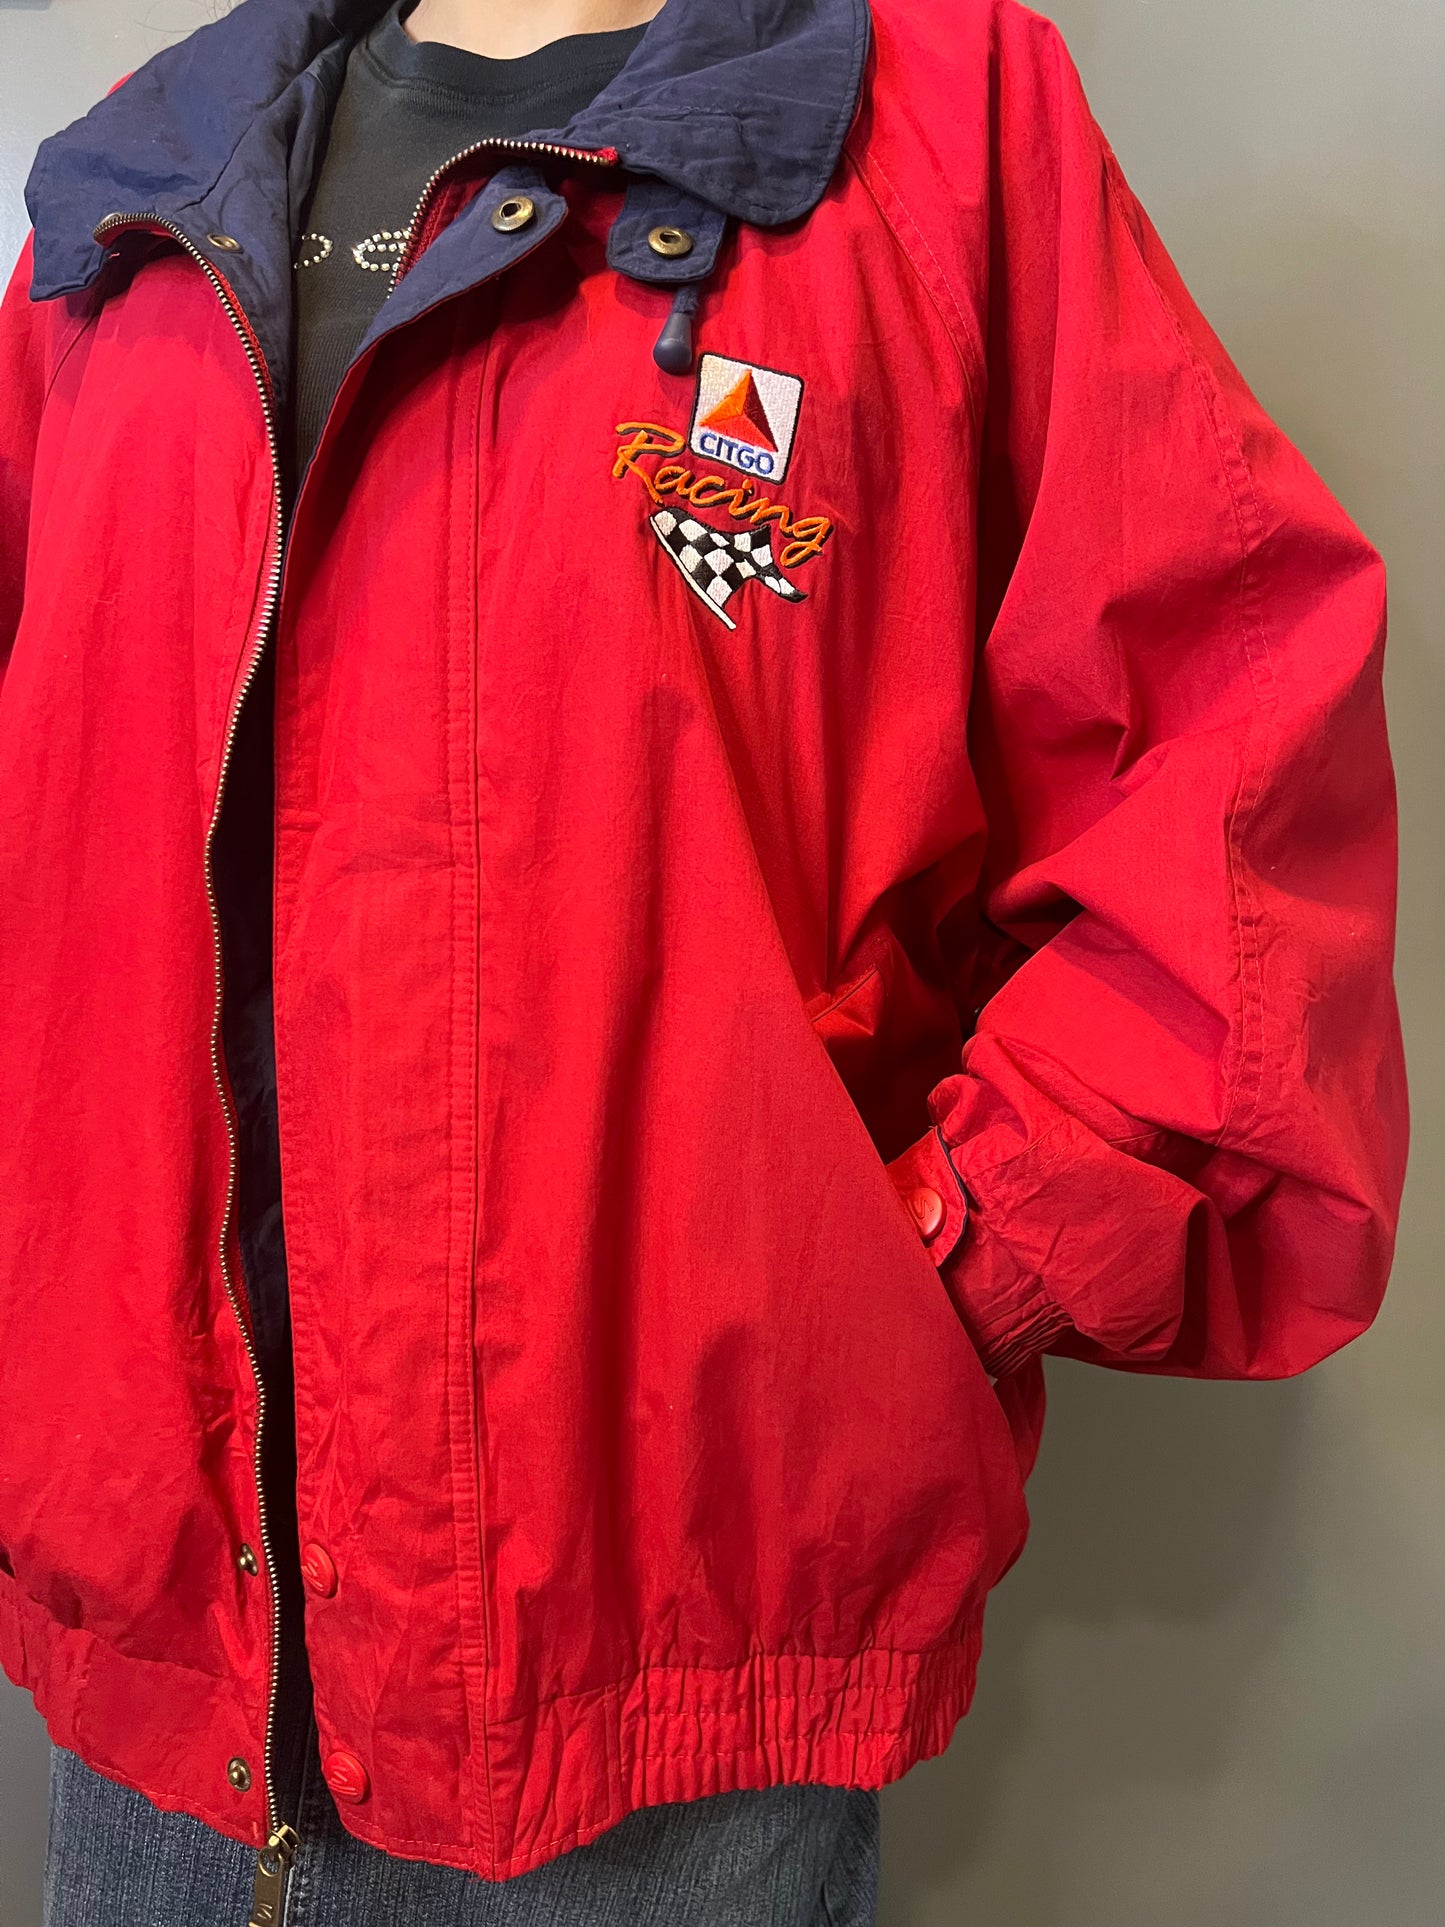 Swingster CITGO Racing Full Zip Red Jacket - XL